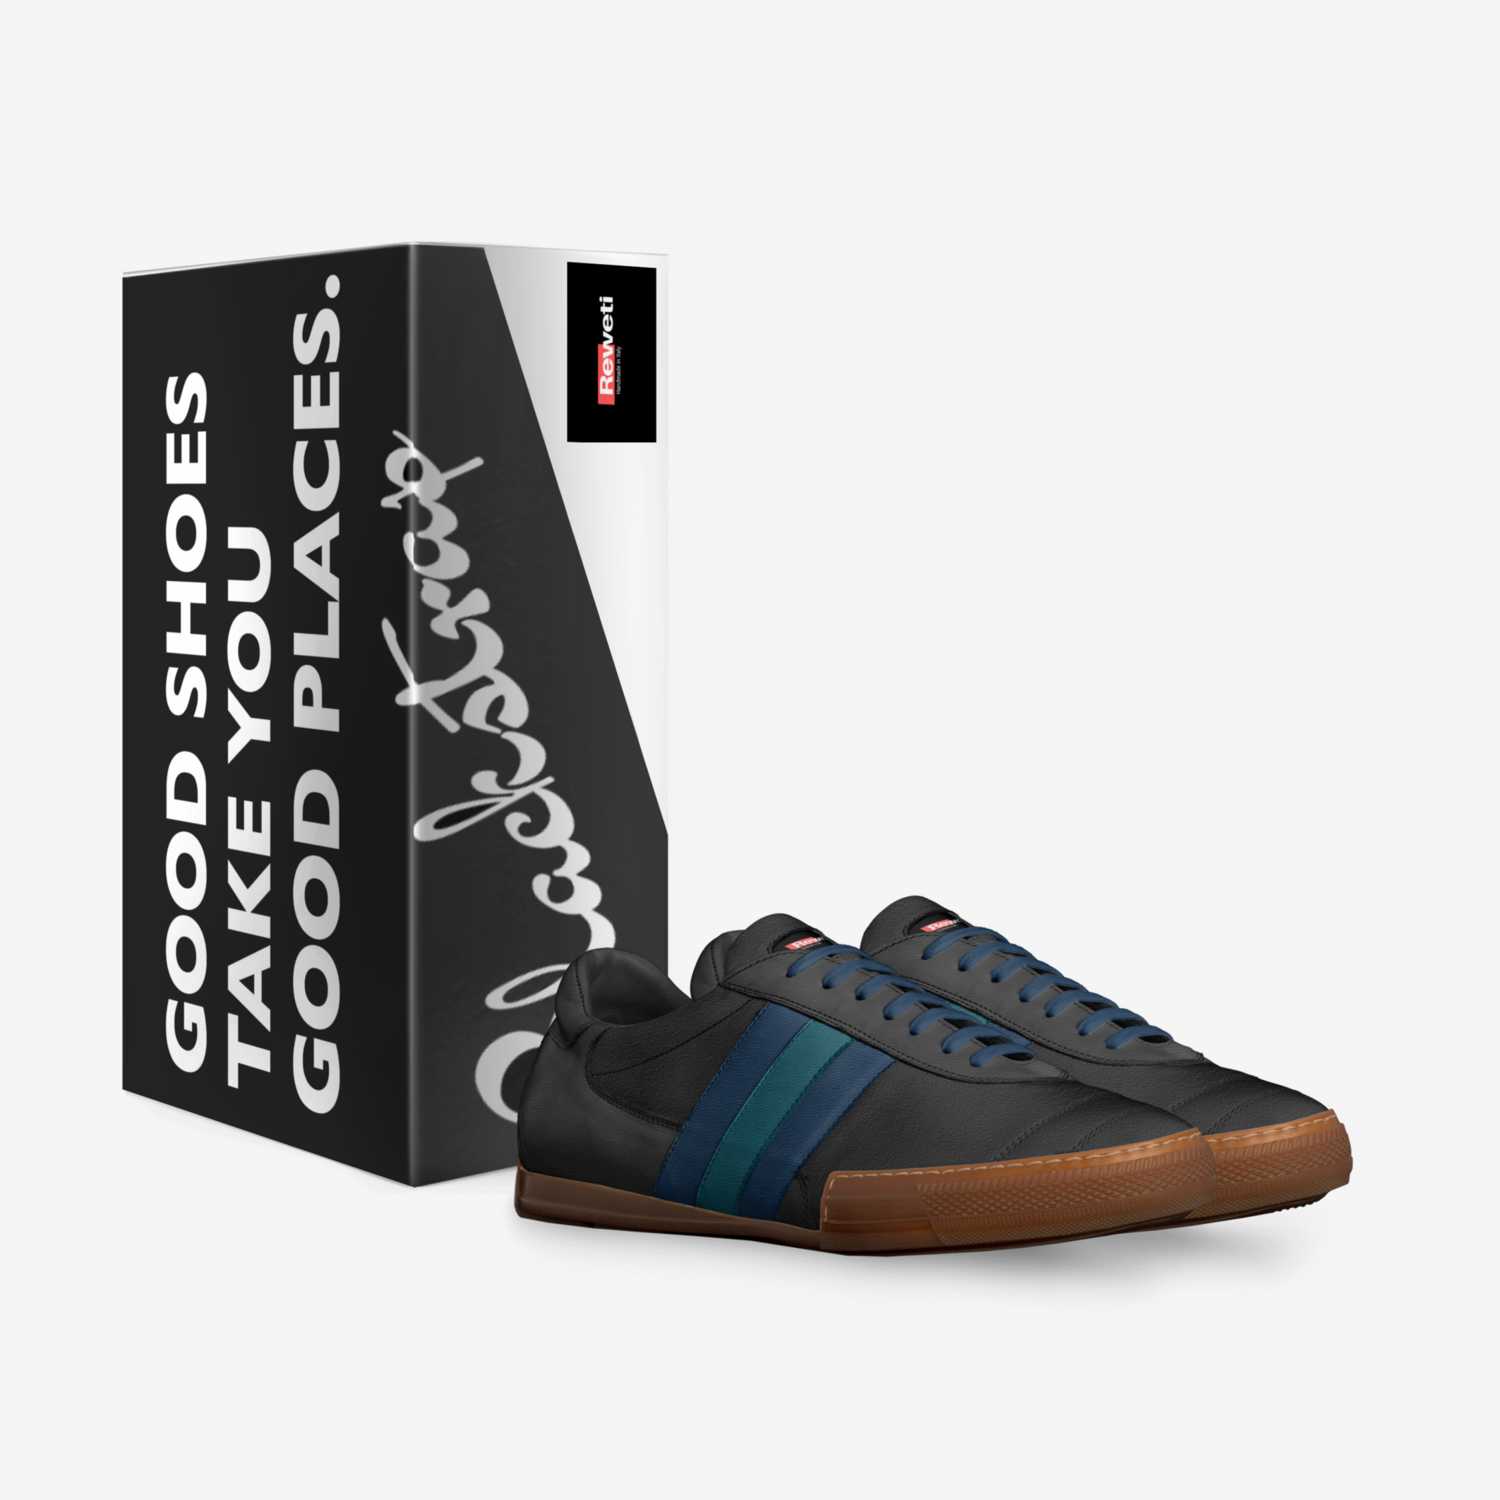 Blackstrap Octane custom made in Italy shoes by Nina Maretta Reweti | Box view